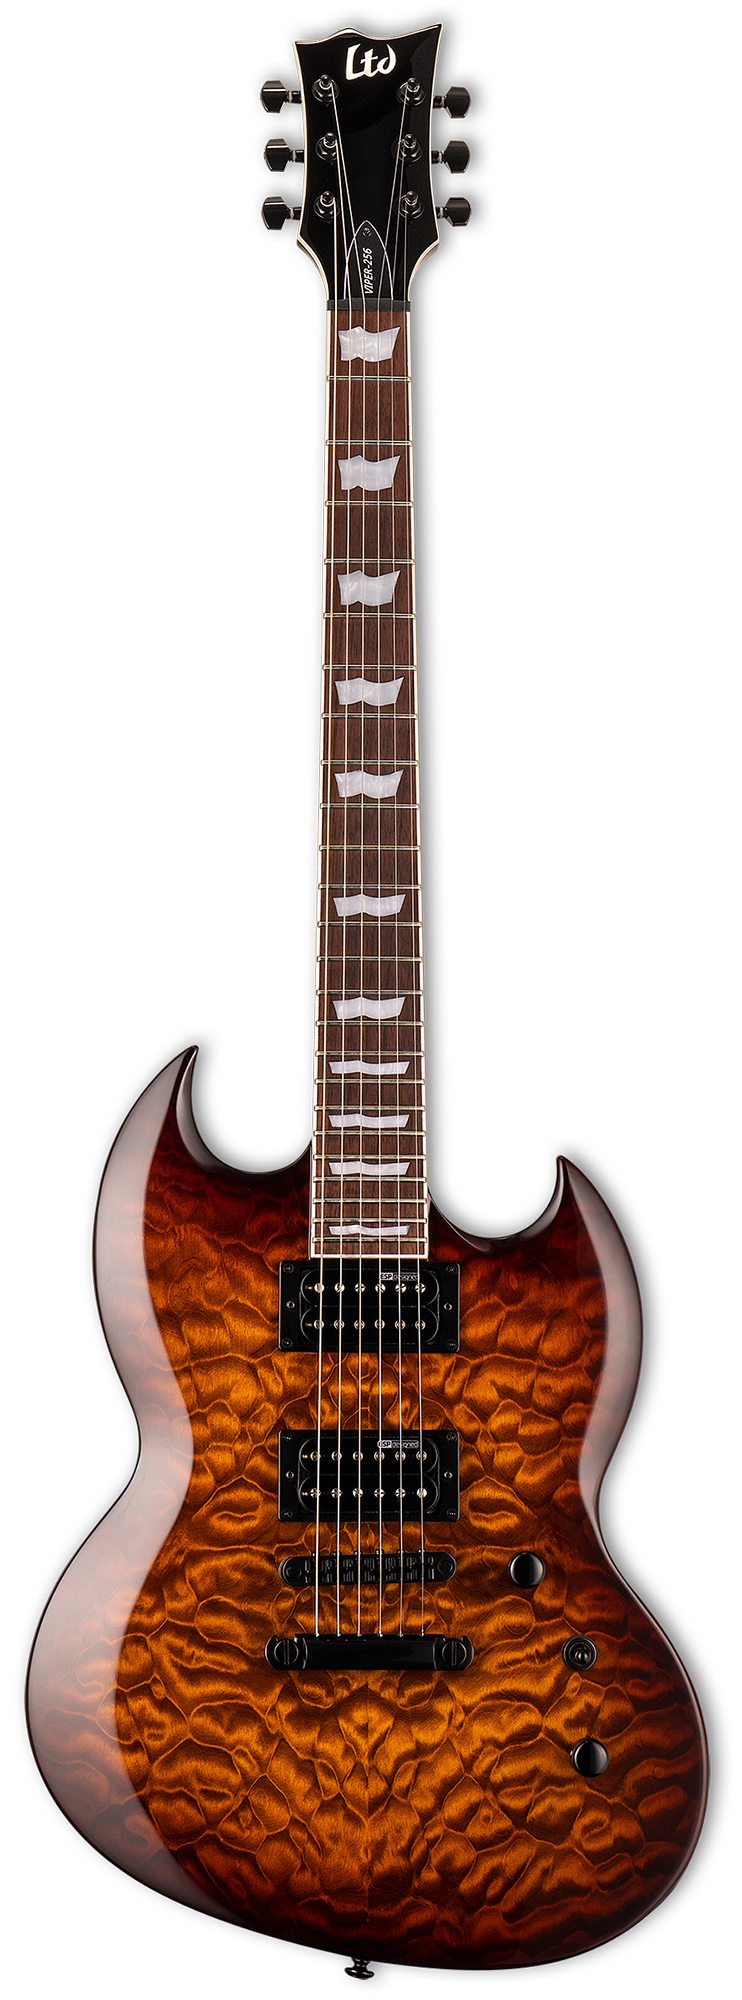 Gibson Metal Rock Guitar PNG HD Quality